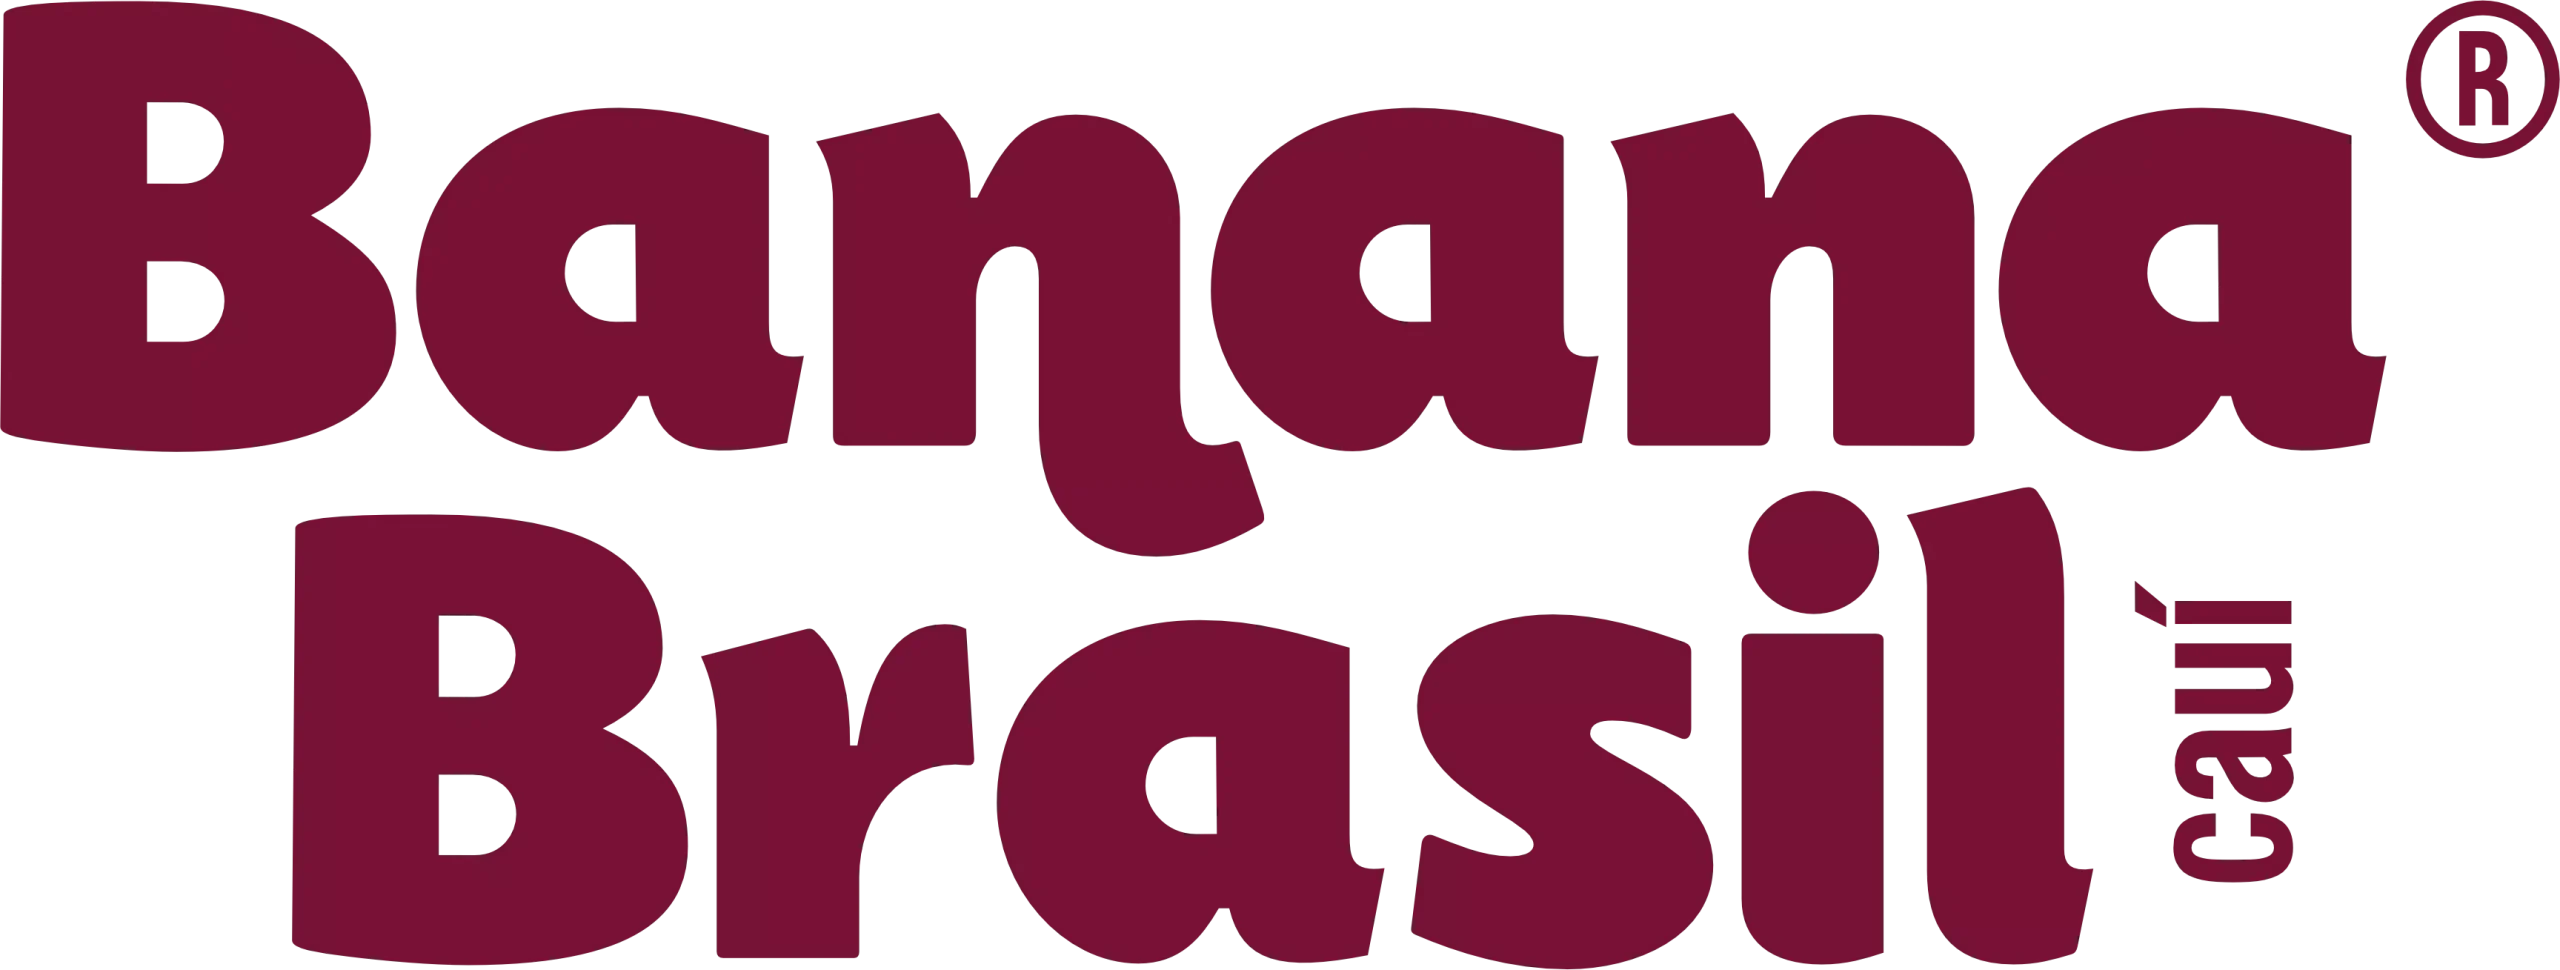 Logotipo da empresa Banana Brasil